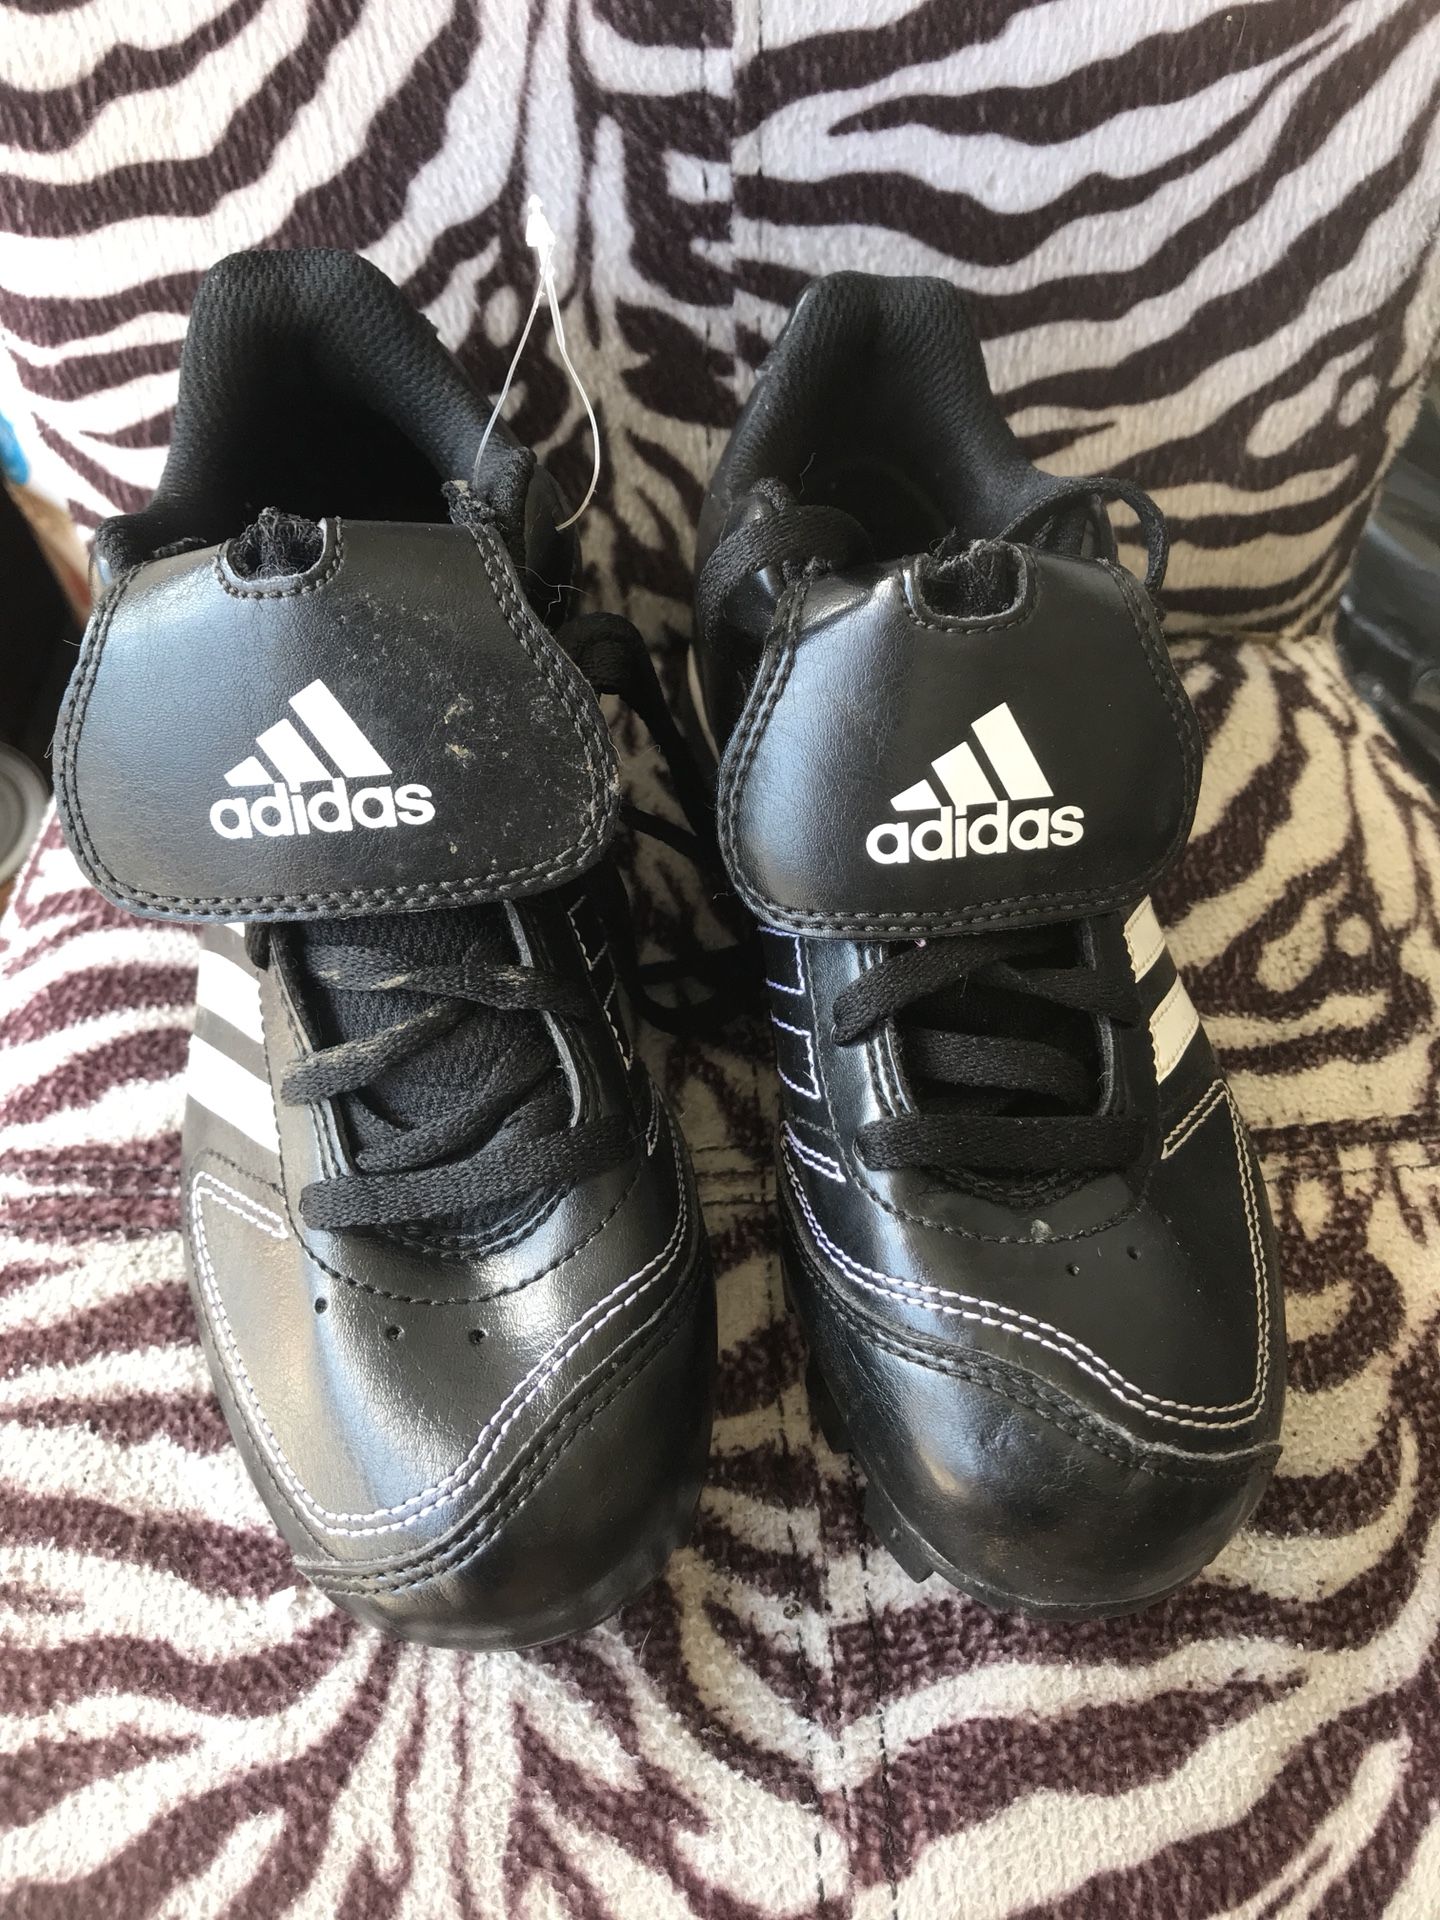 Adidas Boys soccer shoes size 1 like new